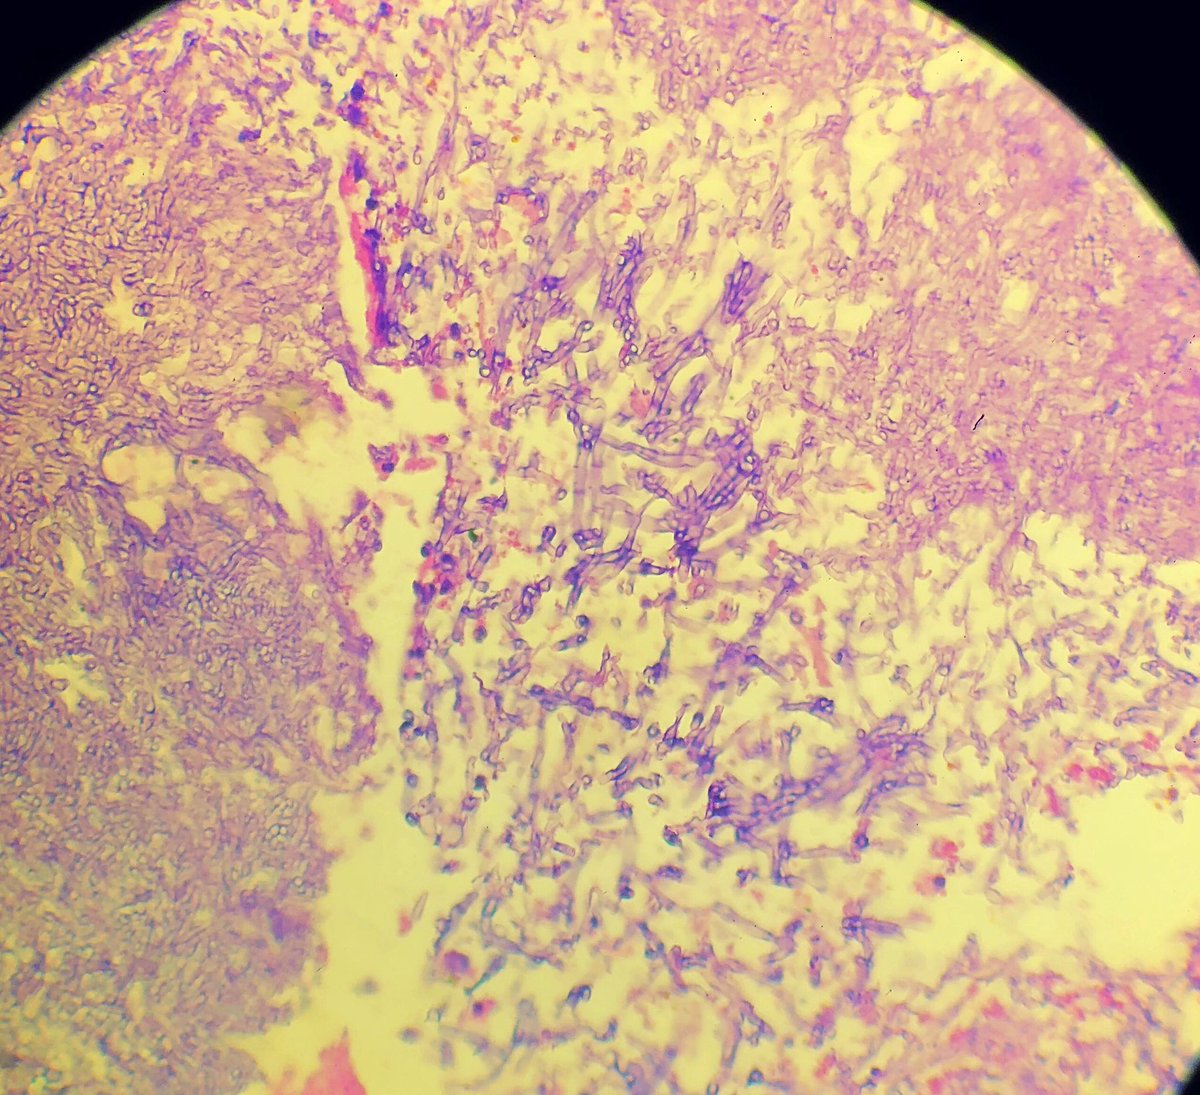 Who knew fungus could look this pretty #pulmonarypath #pathology #fungusball